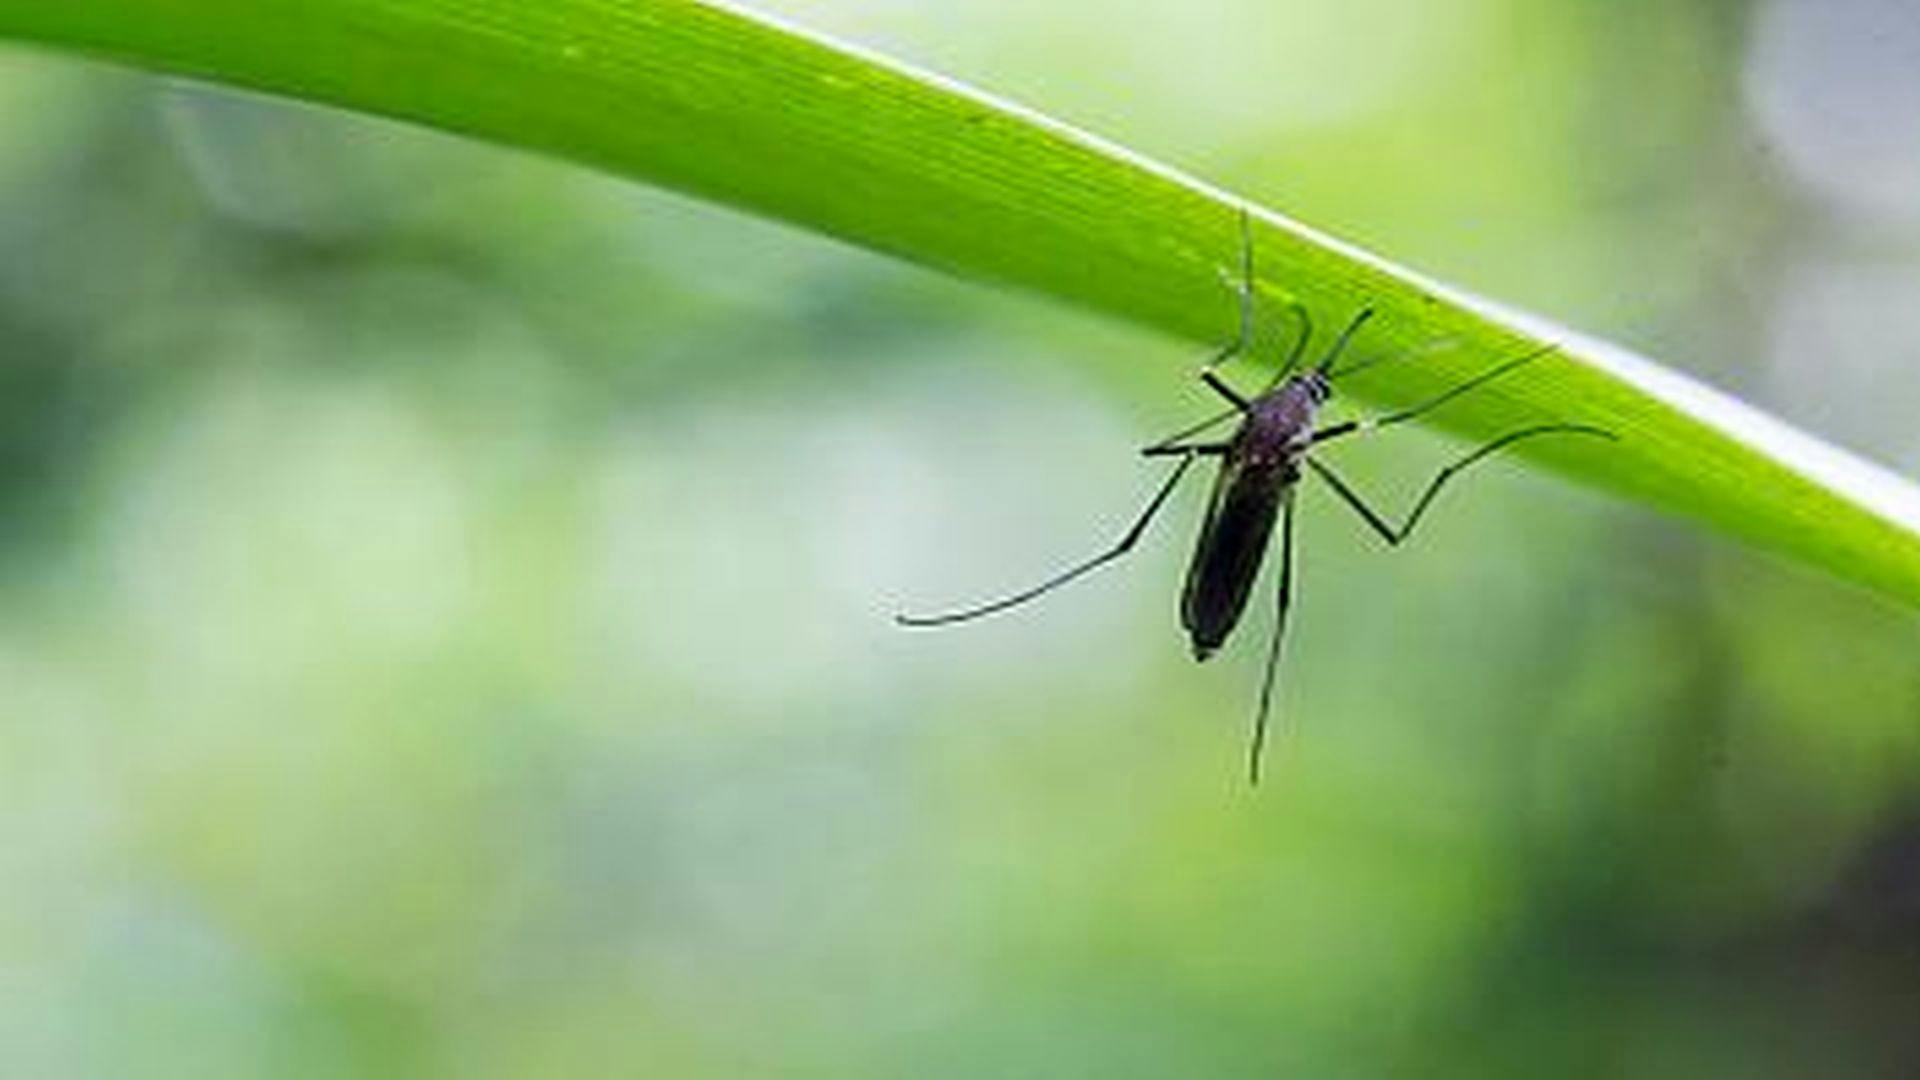 Development of a Novel Vaccine for Zika